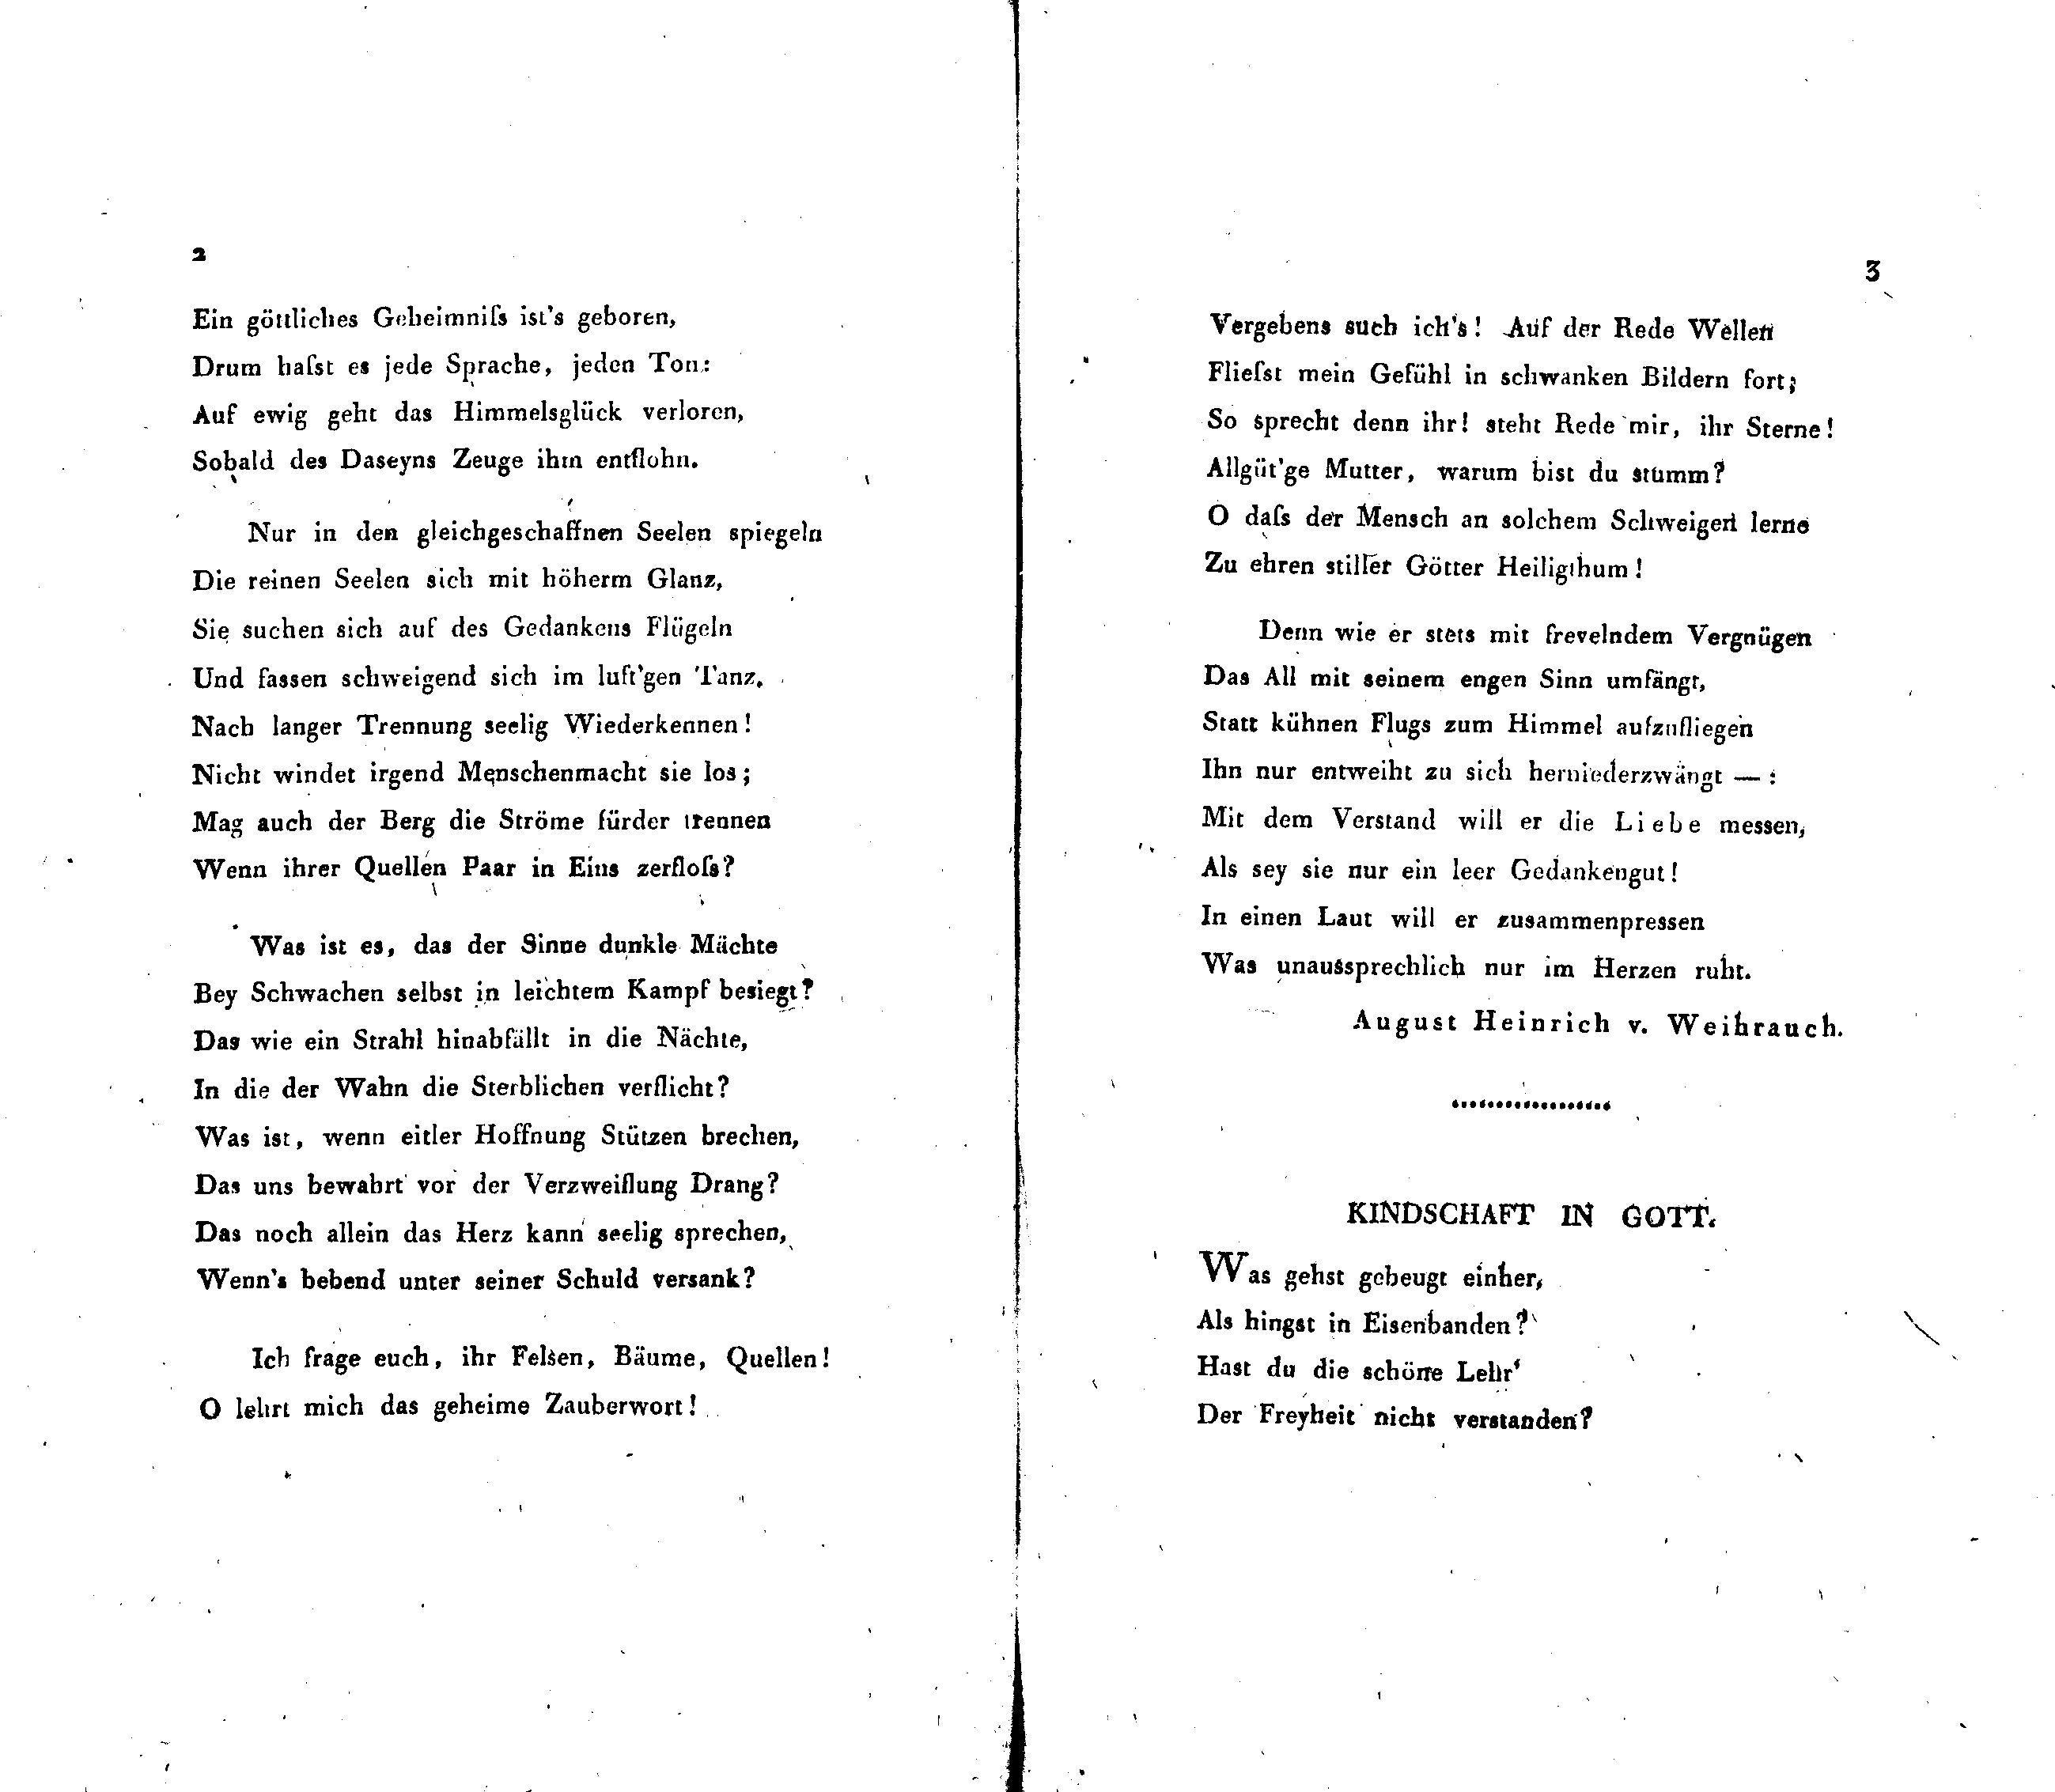 Kindschaft in Gott (1820) | 1. (2-3) Main body of text